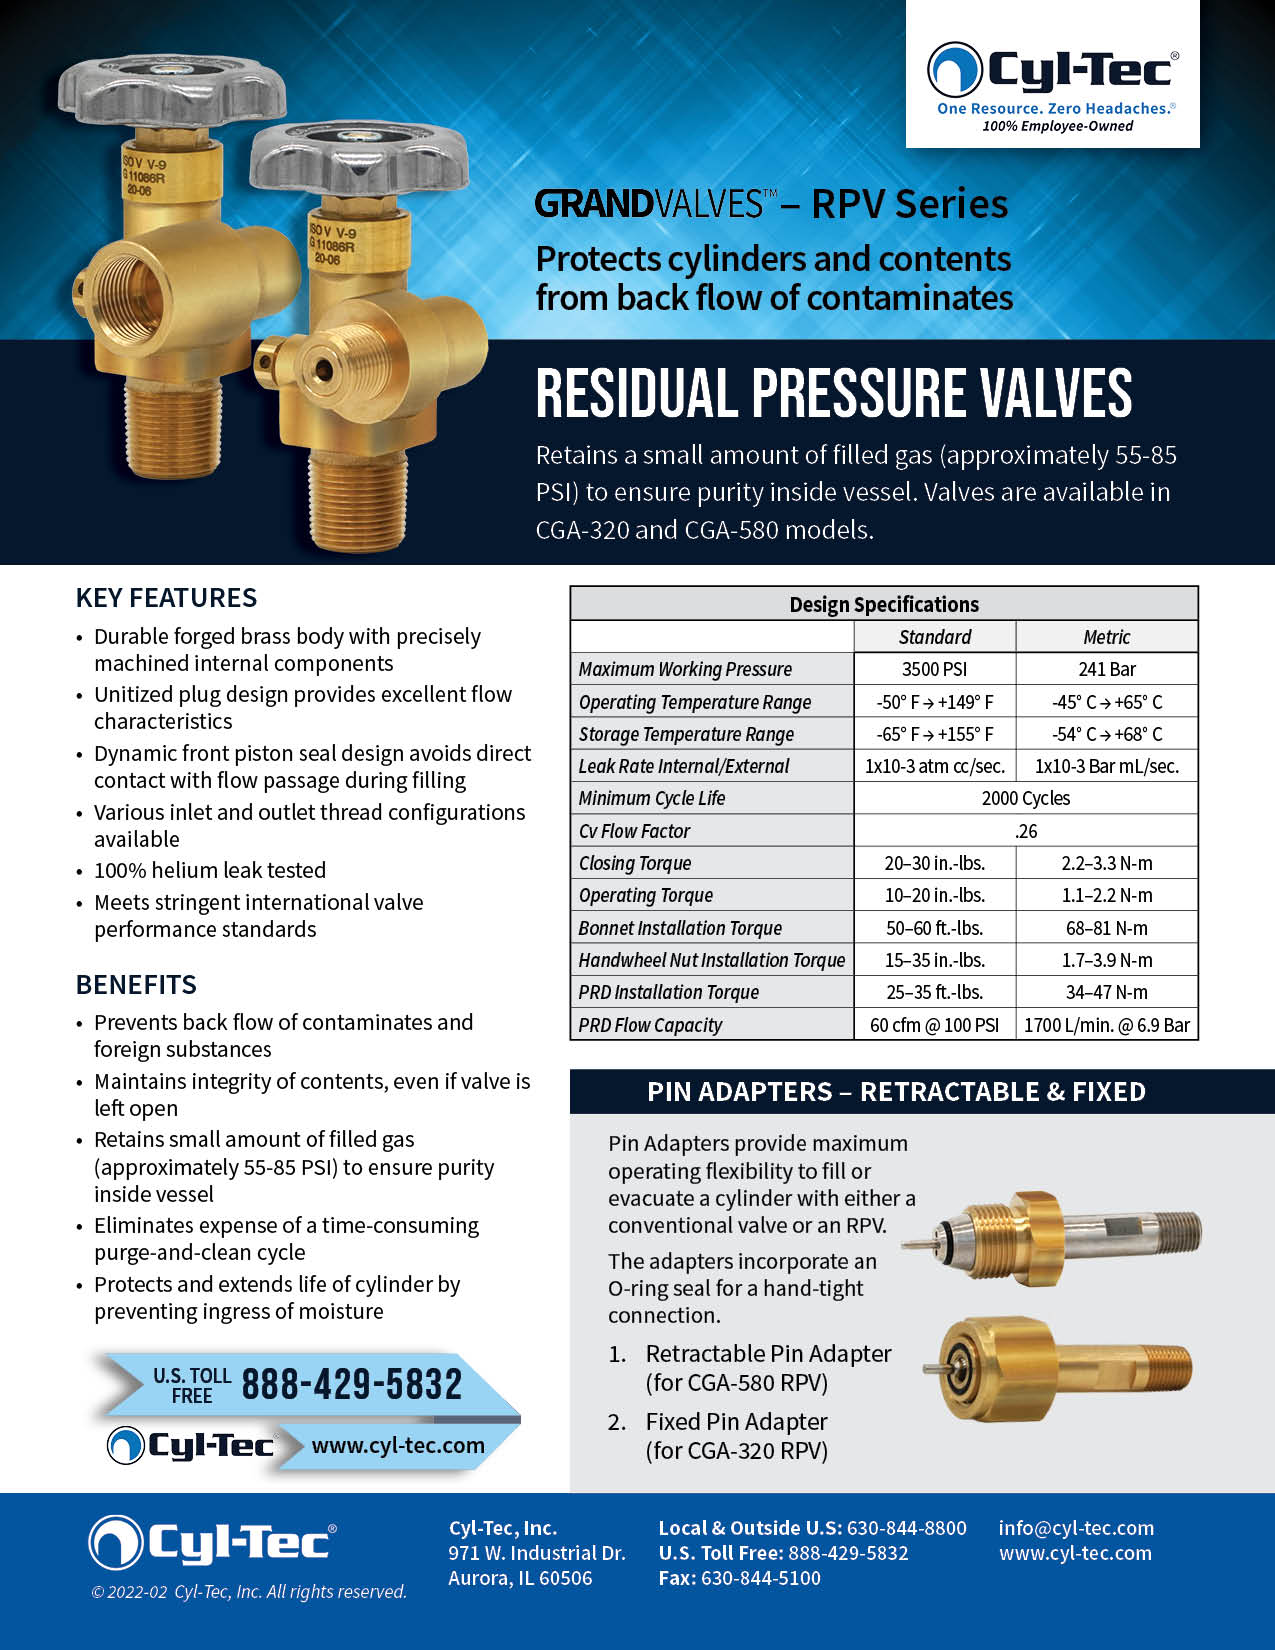 Residual Pressure Valves